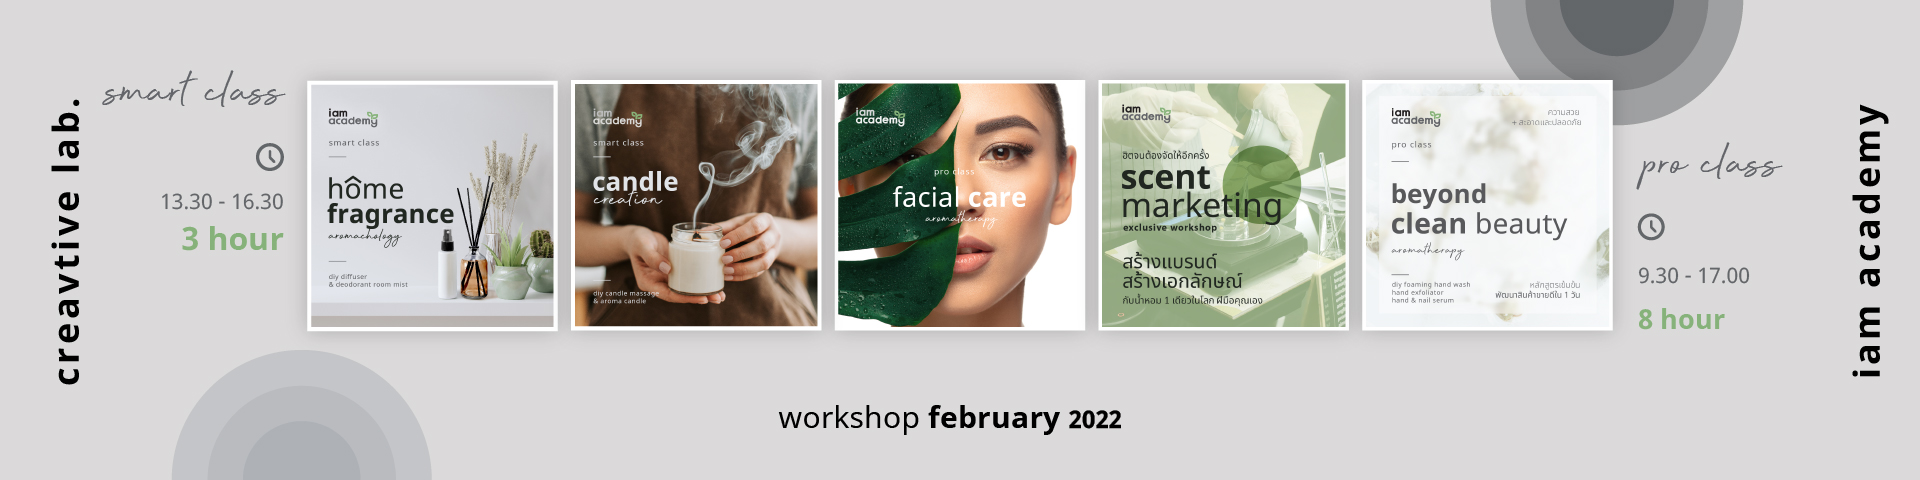 workshop-calendar-feb-2022